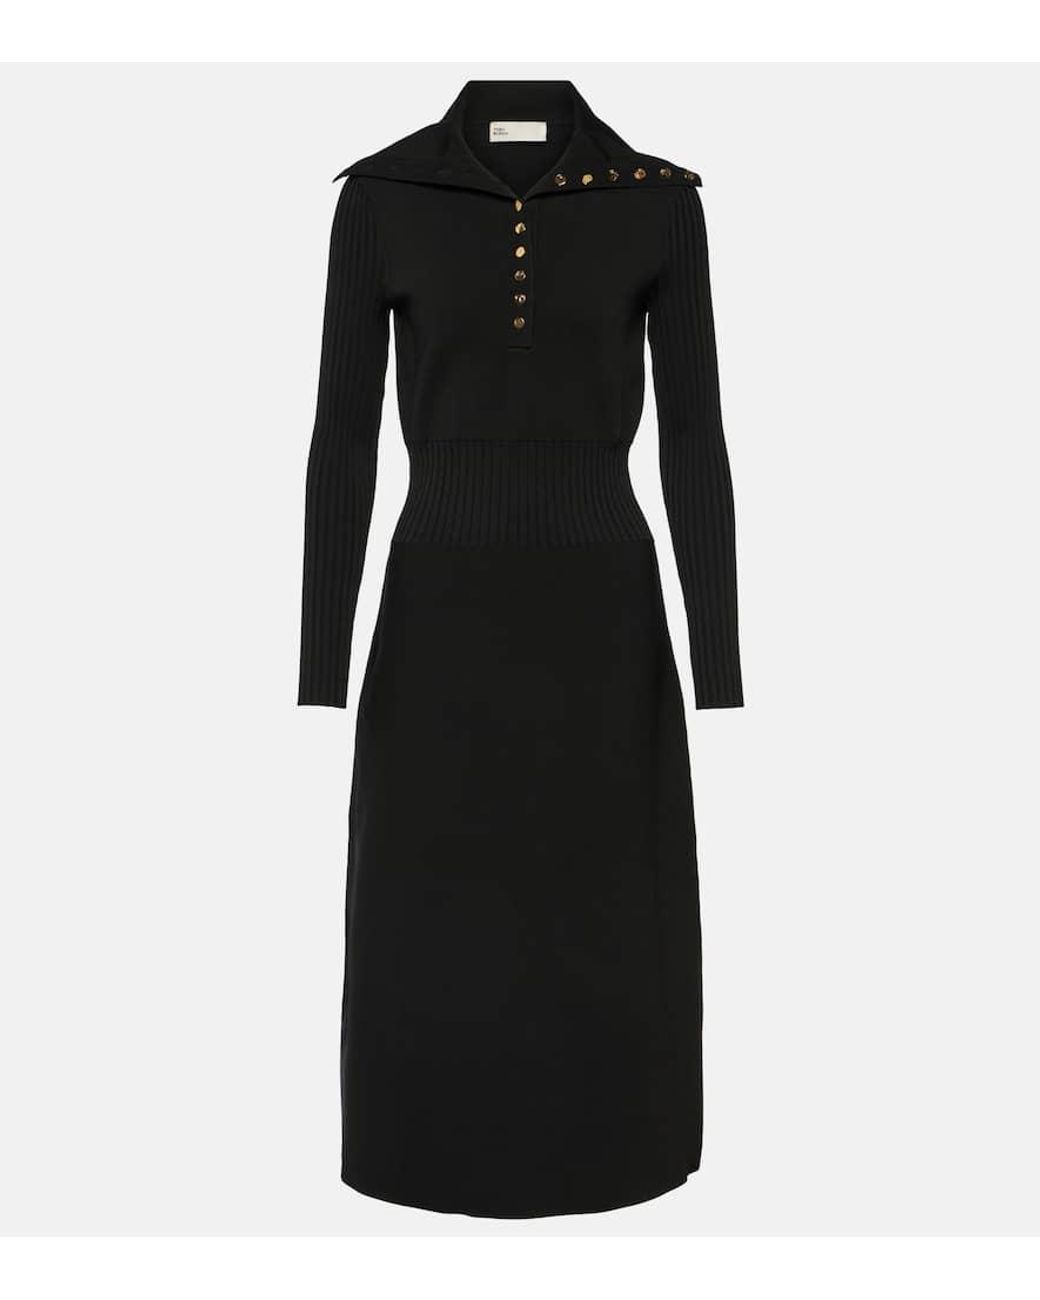 Tory Burch Polo Sweater Dress in Black | Lyst